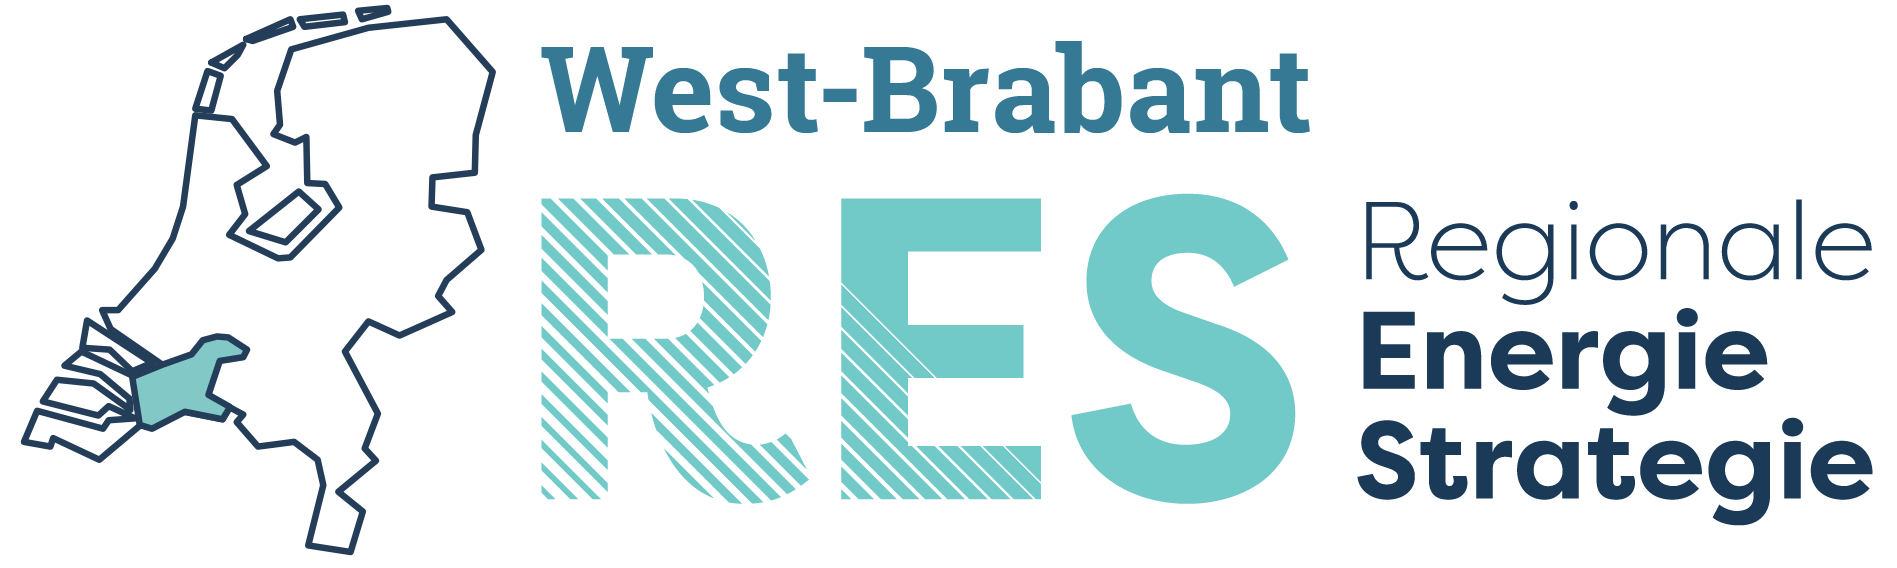 RES West-Brabant logo